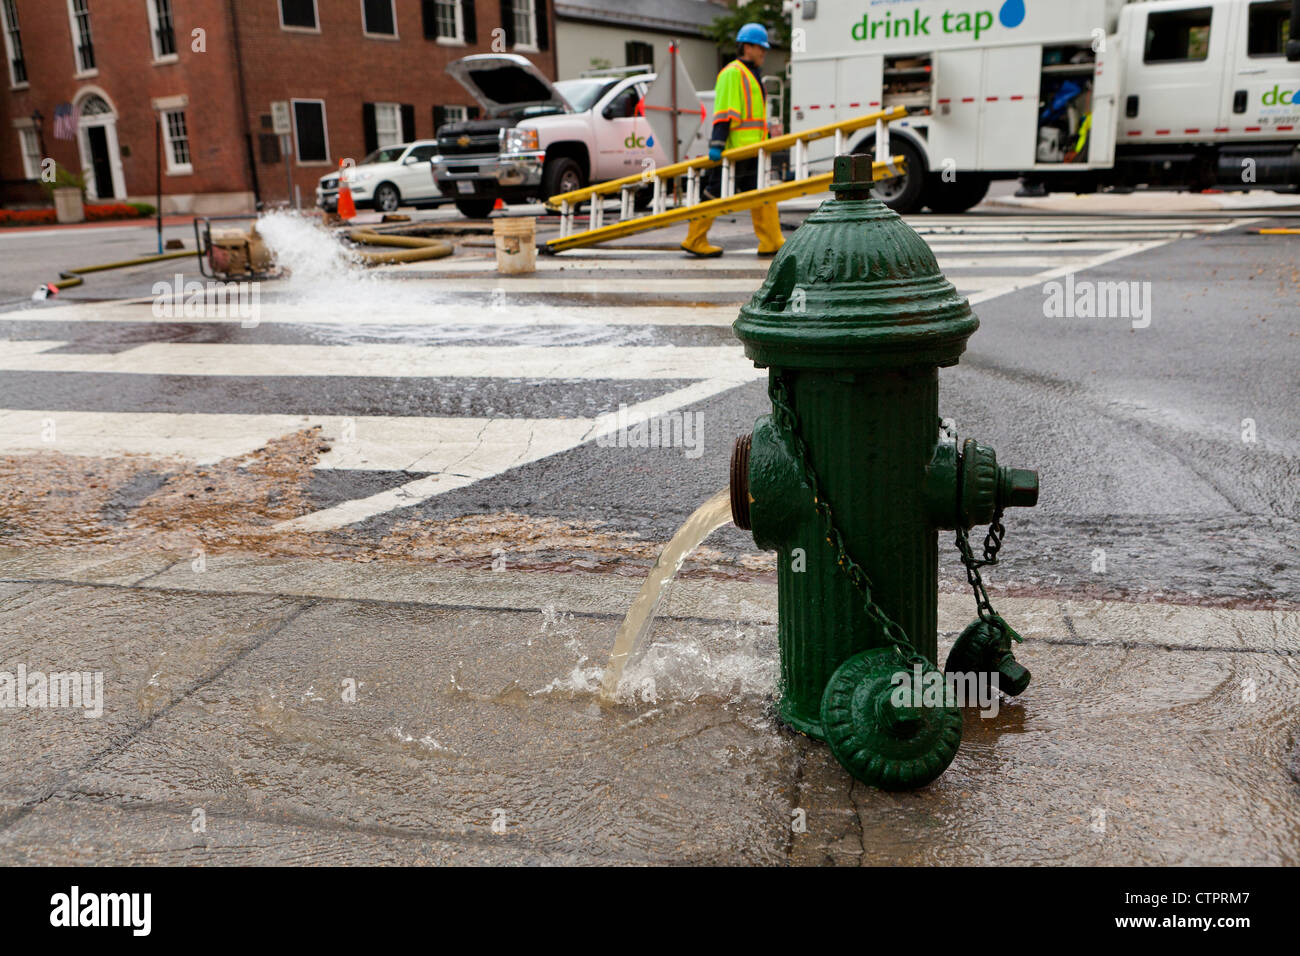 Open fire hydrant - Washington, DC USA Stock Photo